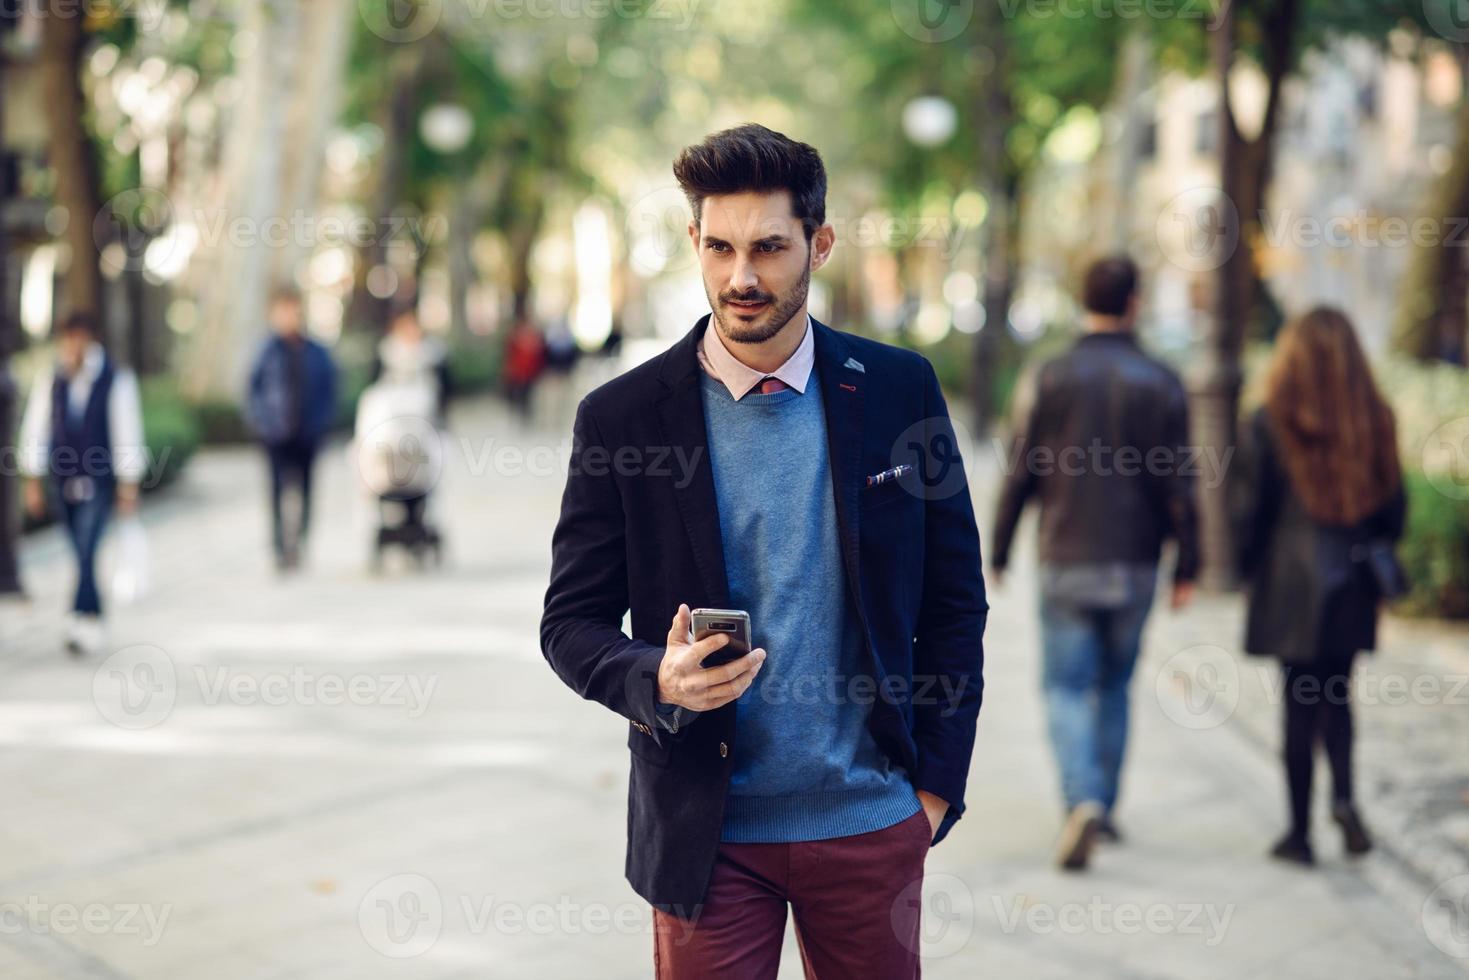 man på gatan i formella kläder med smartphone i handen. foto